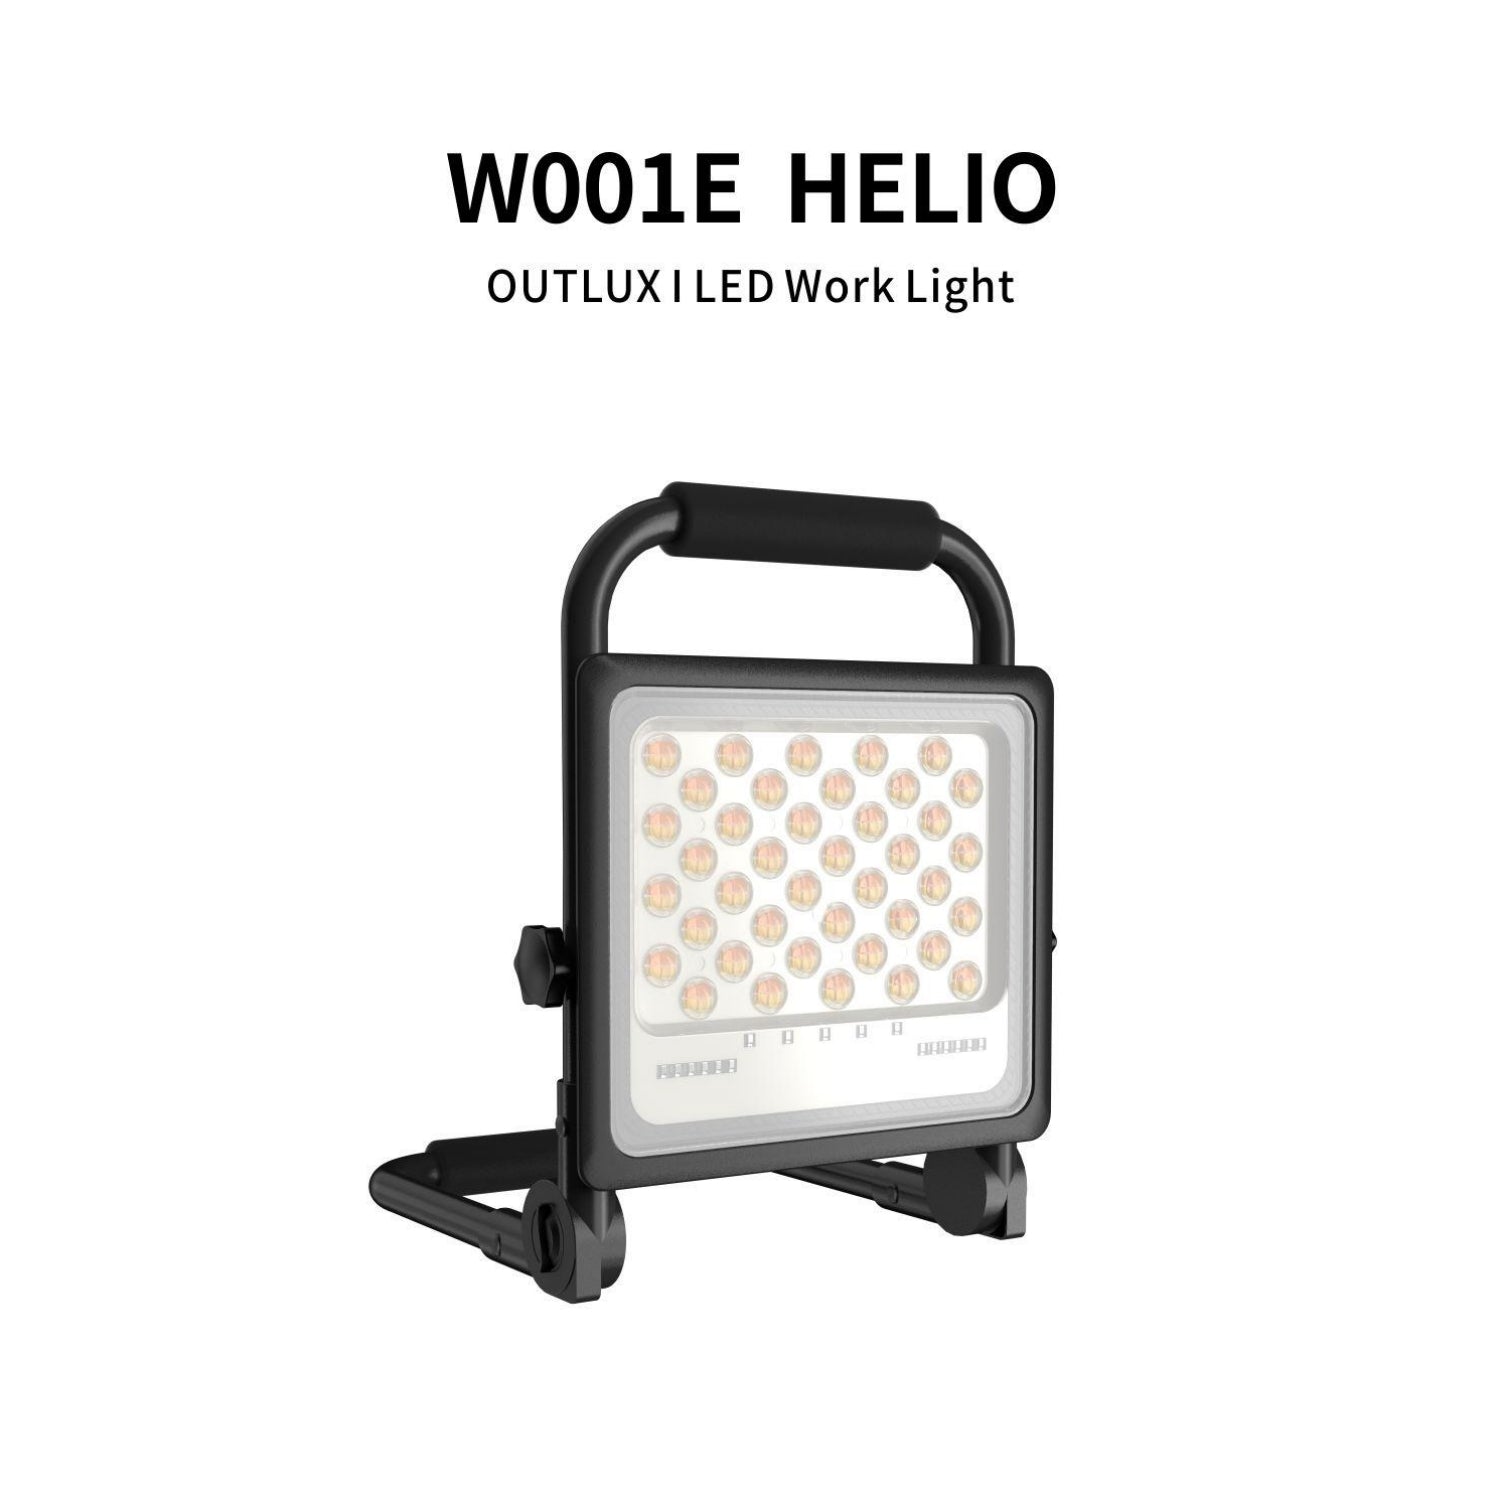 Outlux LED Work Light-W001E